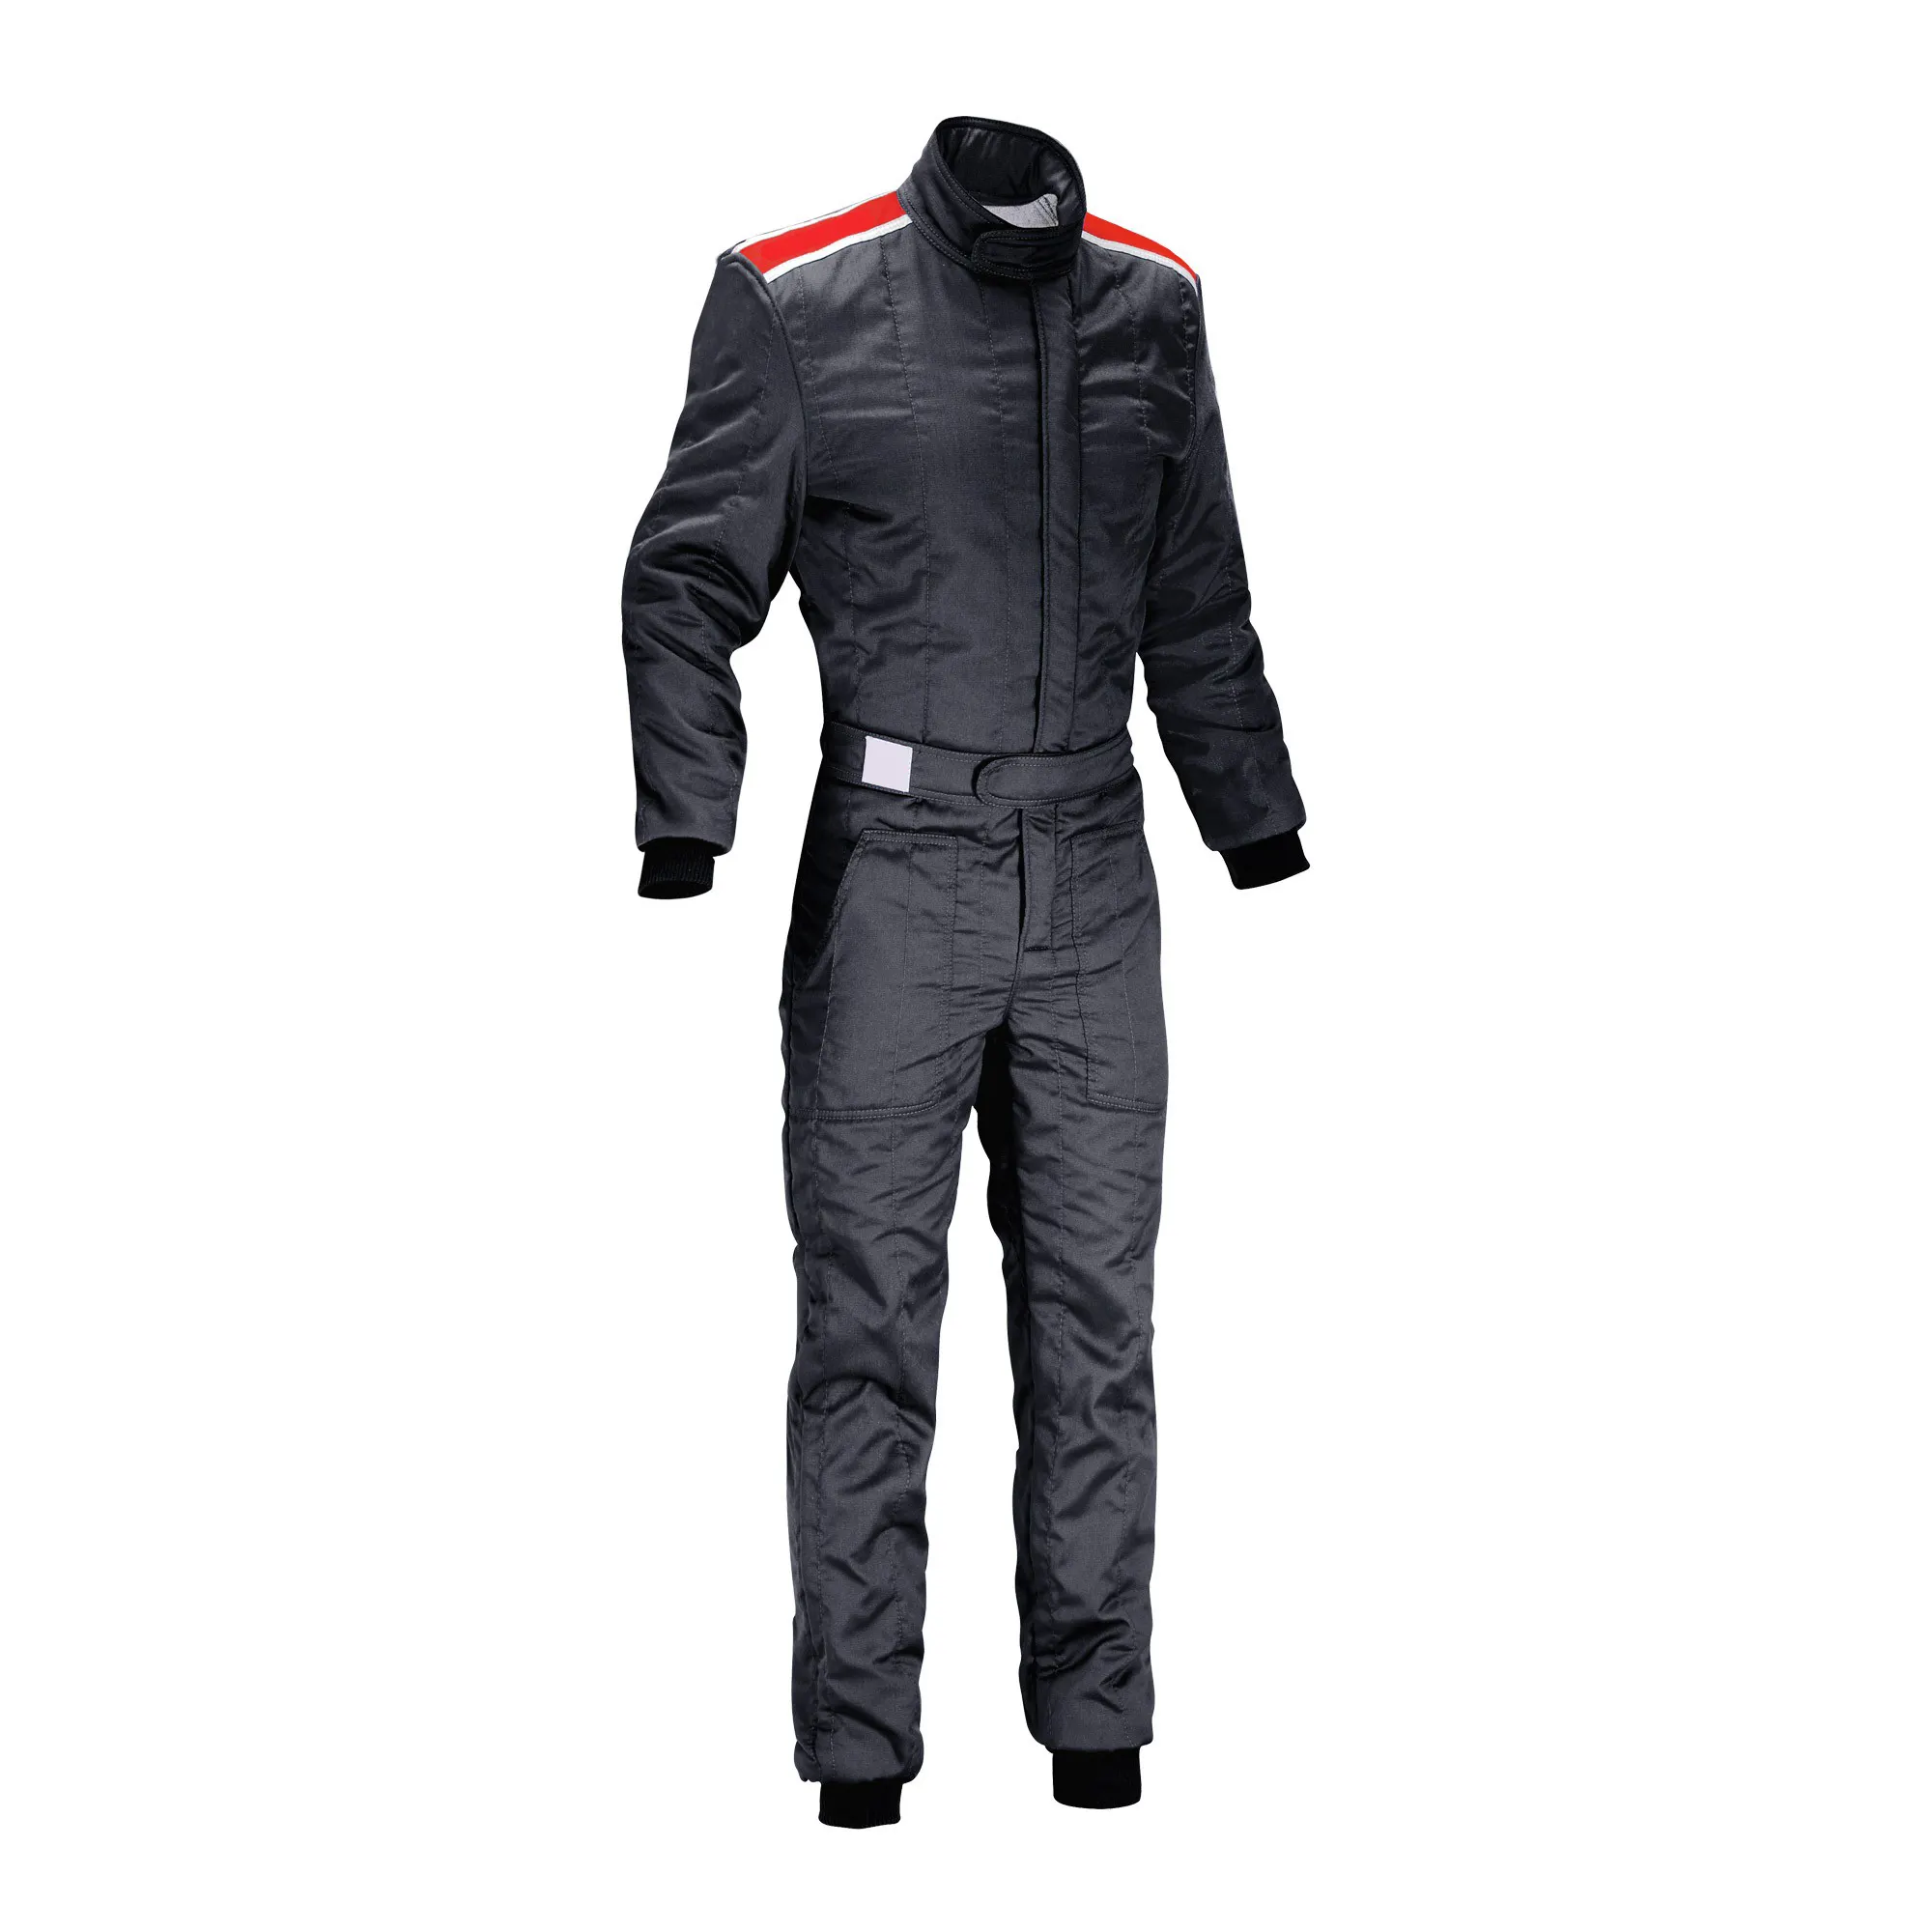 Keselamatan adalah paramount dalam balap kart dan seragam kami terbuat dari bahan tahan api untuk melindungi pengemudi